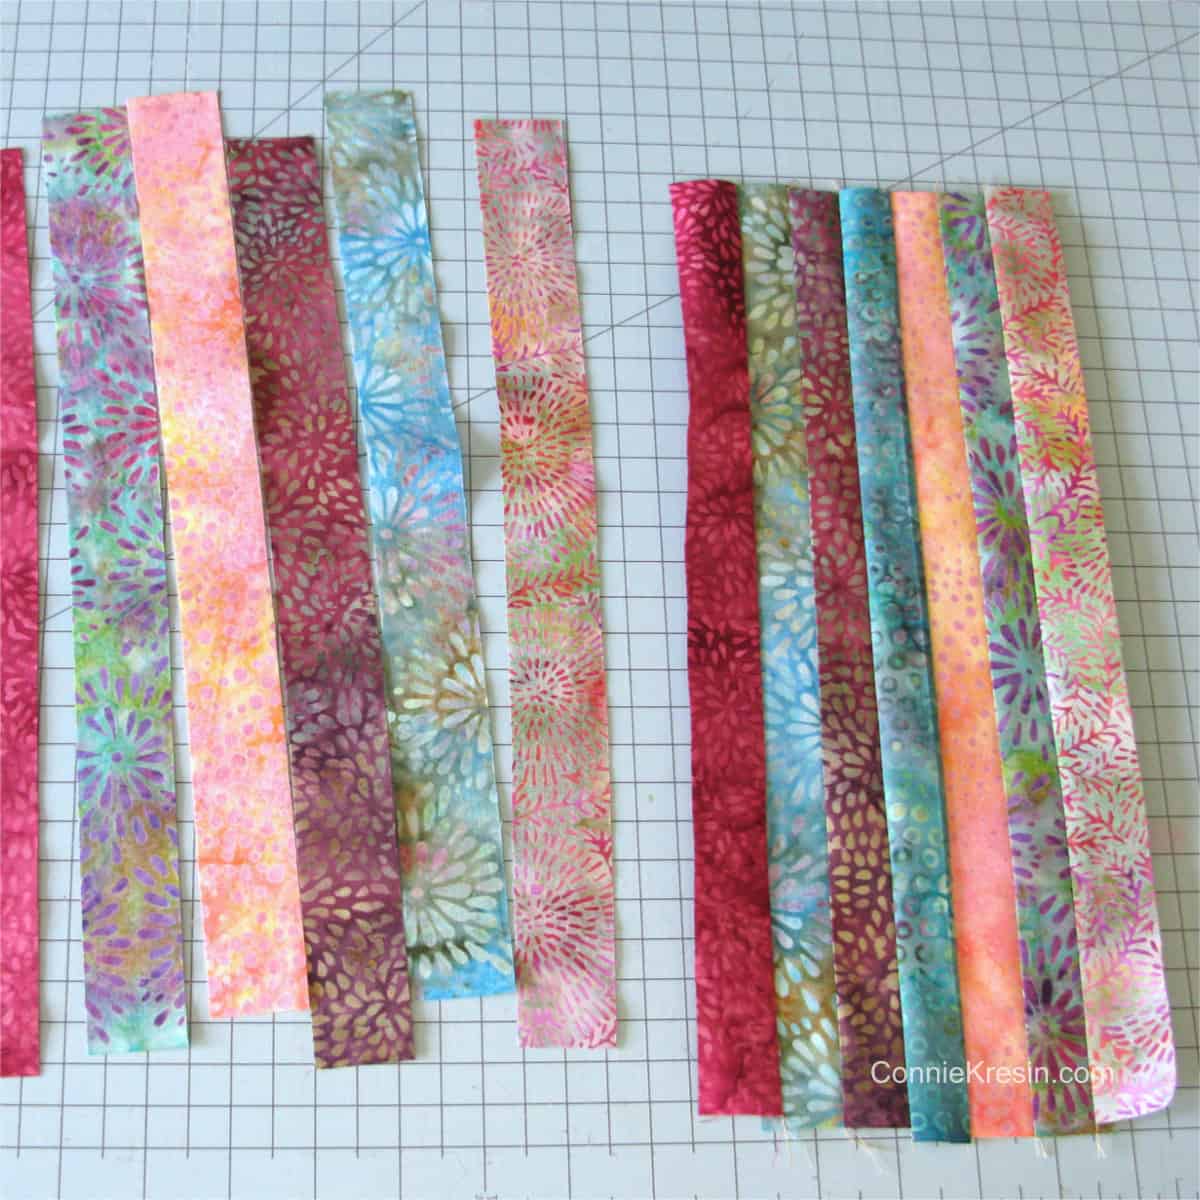 Strips of batik fabrics sewn together for applique